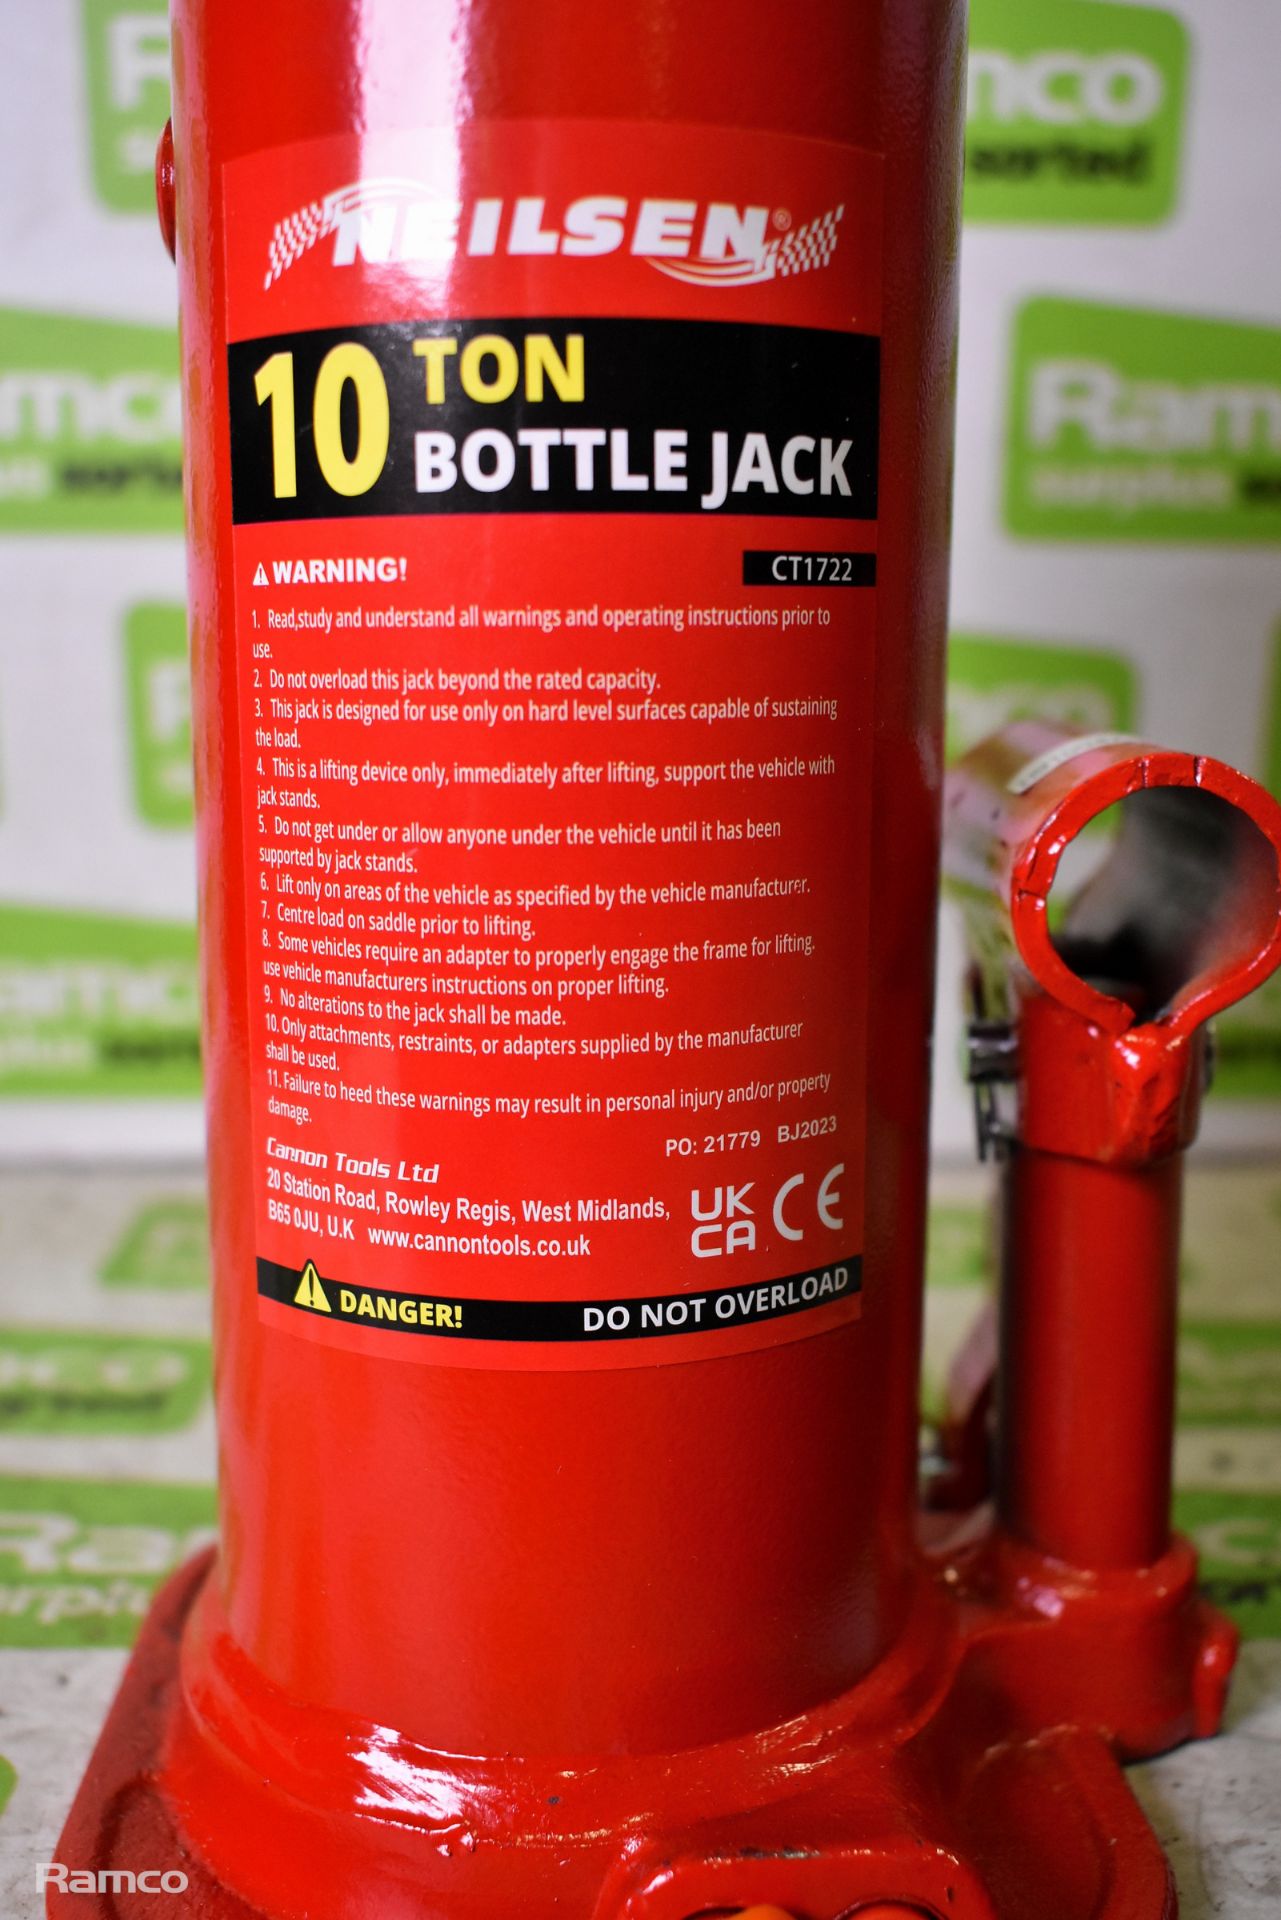 Neilsen 10 Ton bottle jack, 3x packs of Gorilla wipes - 6 tubs per pack, 10mm x 220m Rope - Image 7 of 11